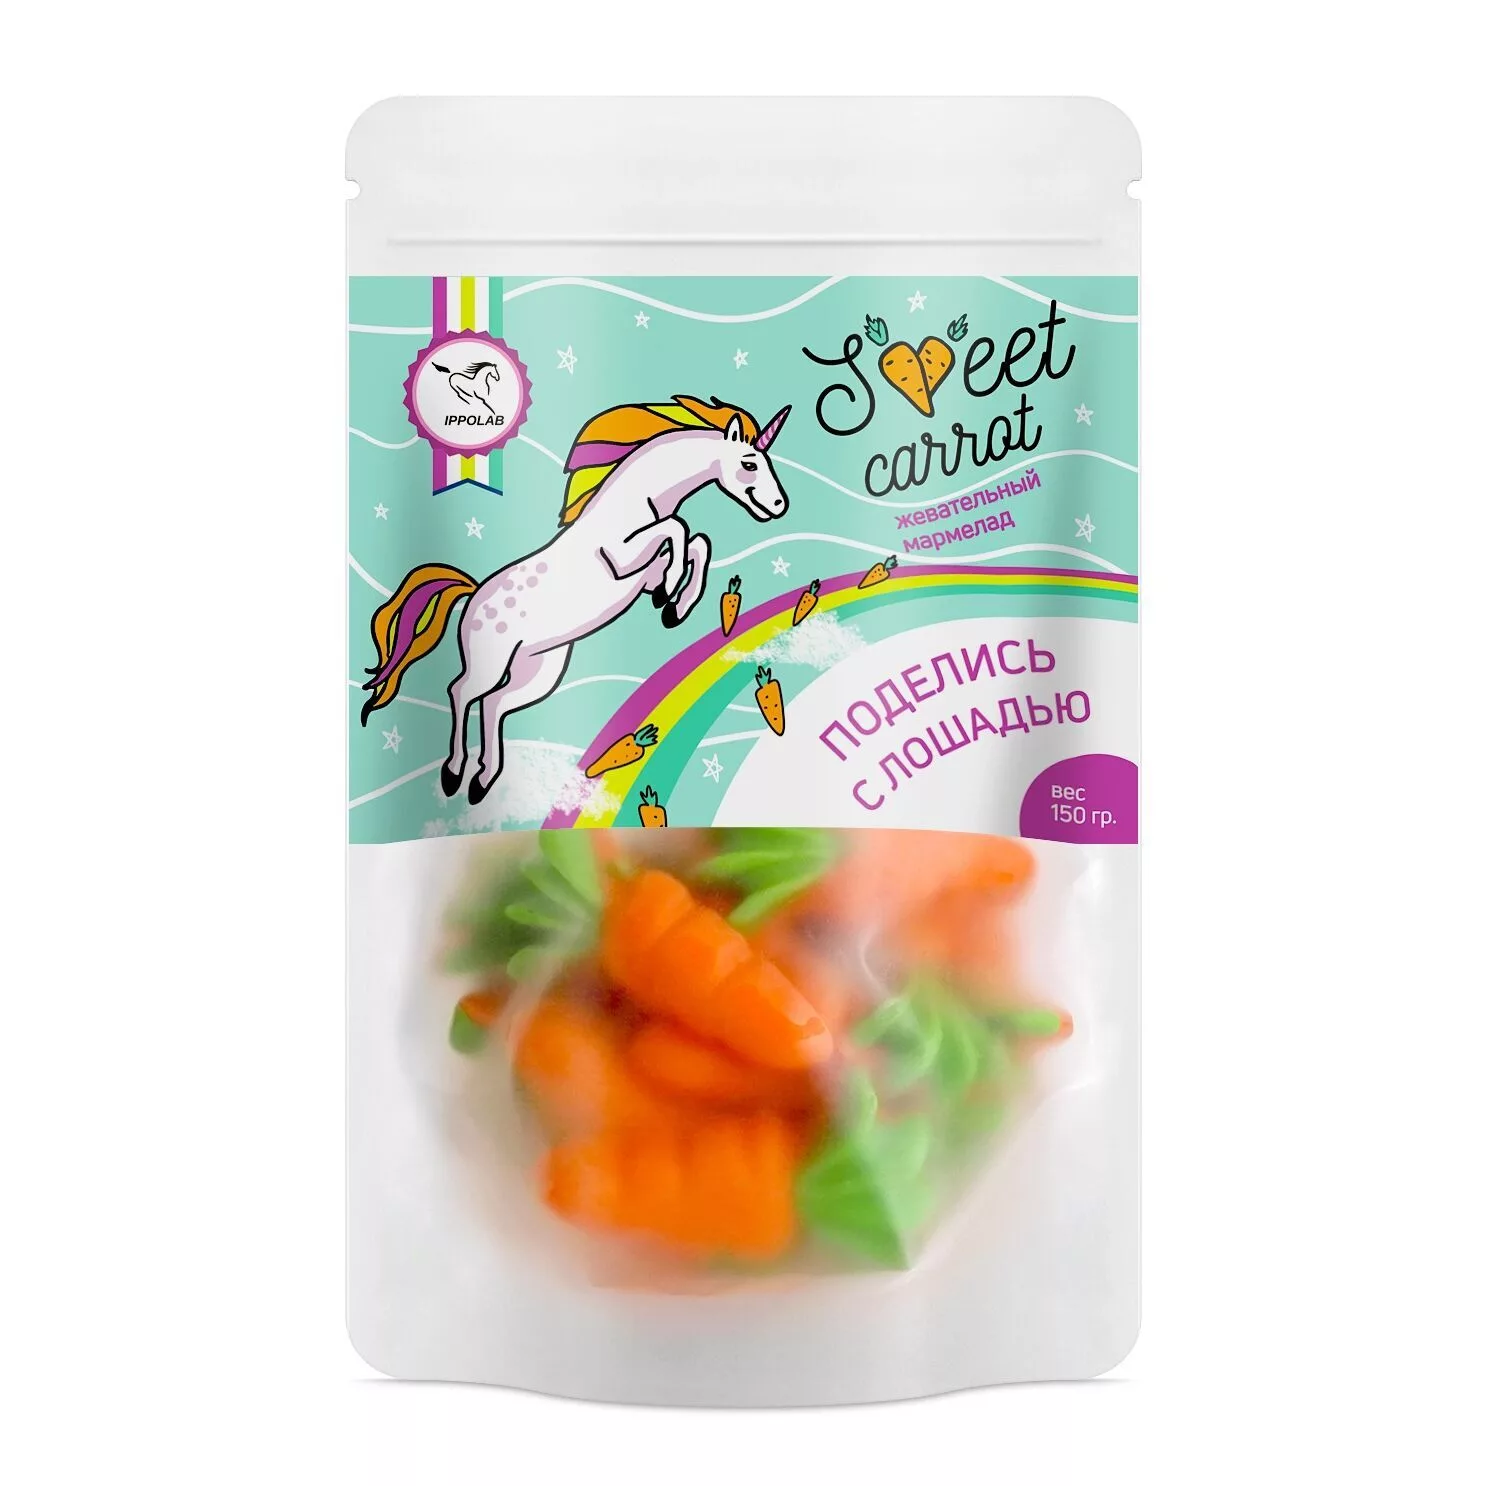     "Sweet Carrots" IPPOLAB ()